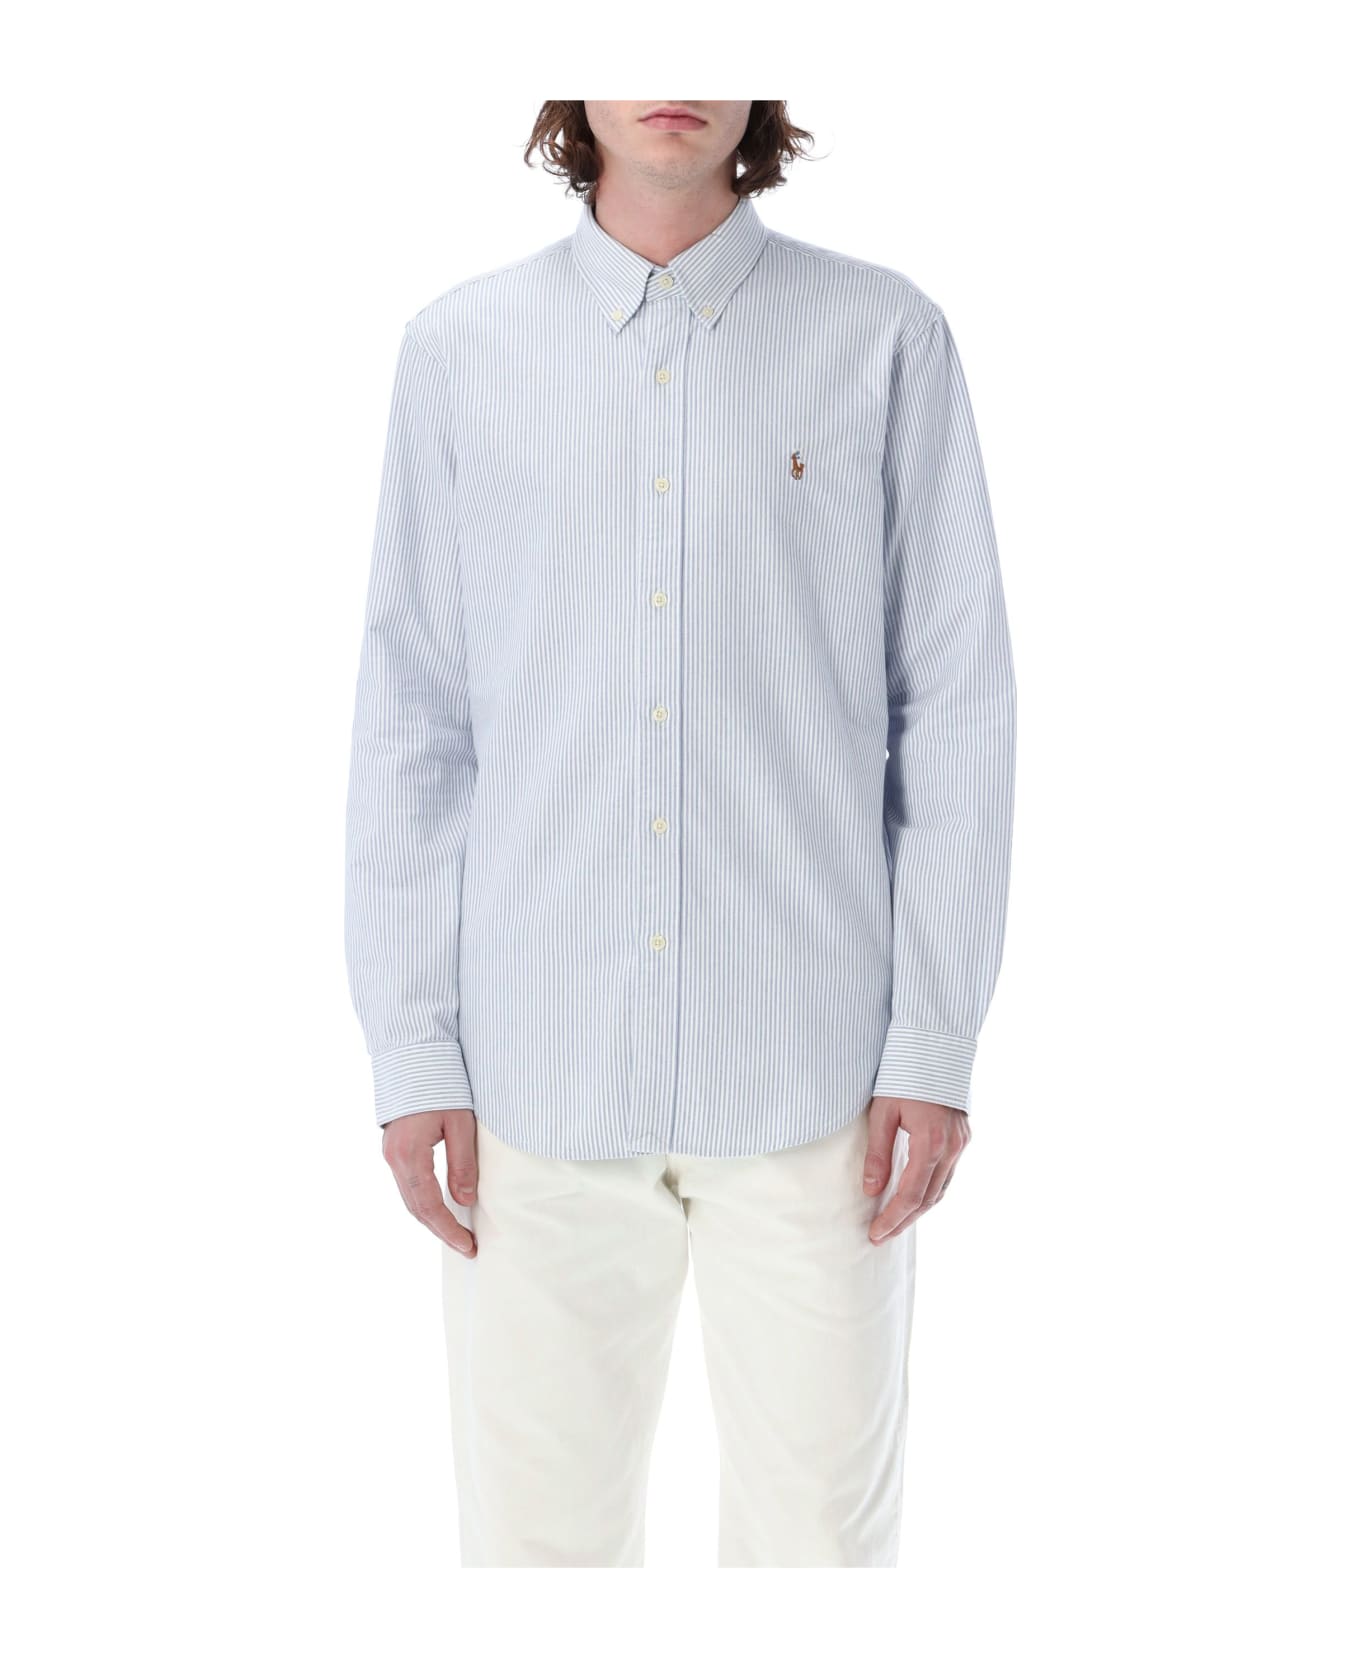 Polo Ralph Lauren Custom Fit Shirt - BLUE WHITE STRIPES